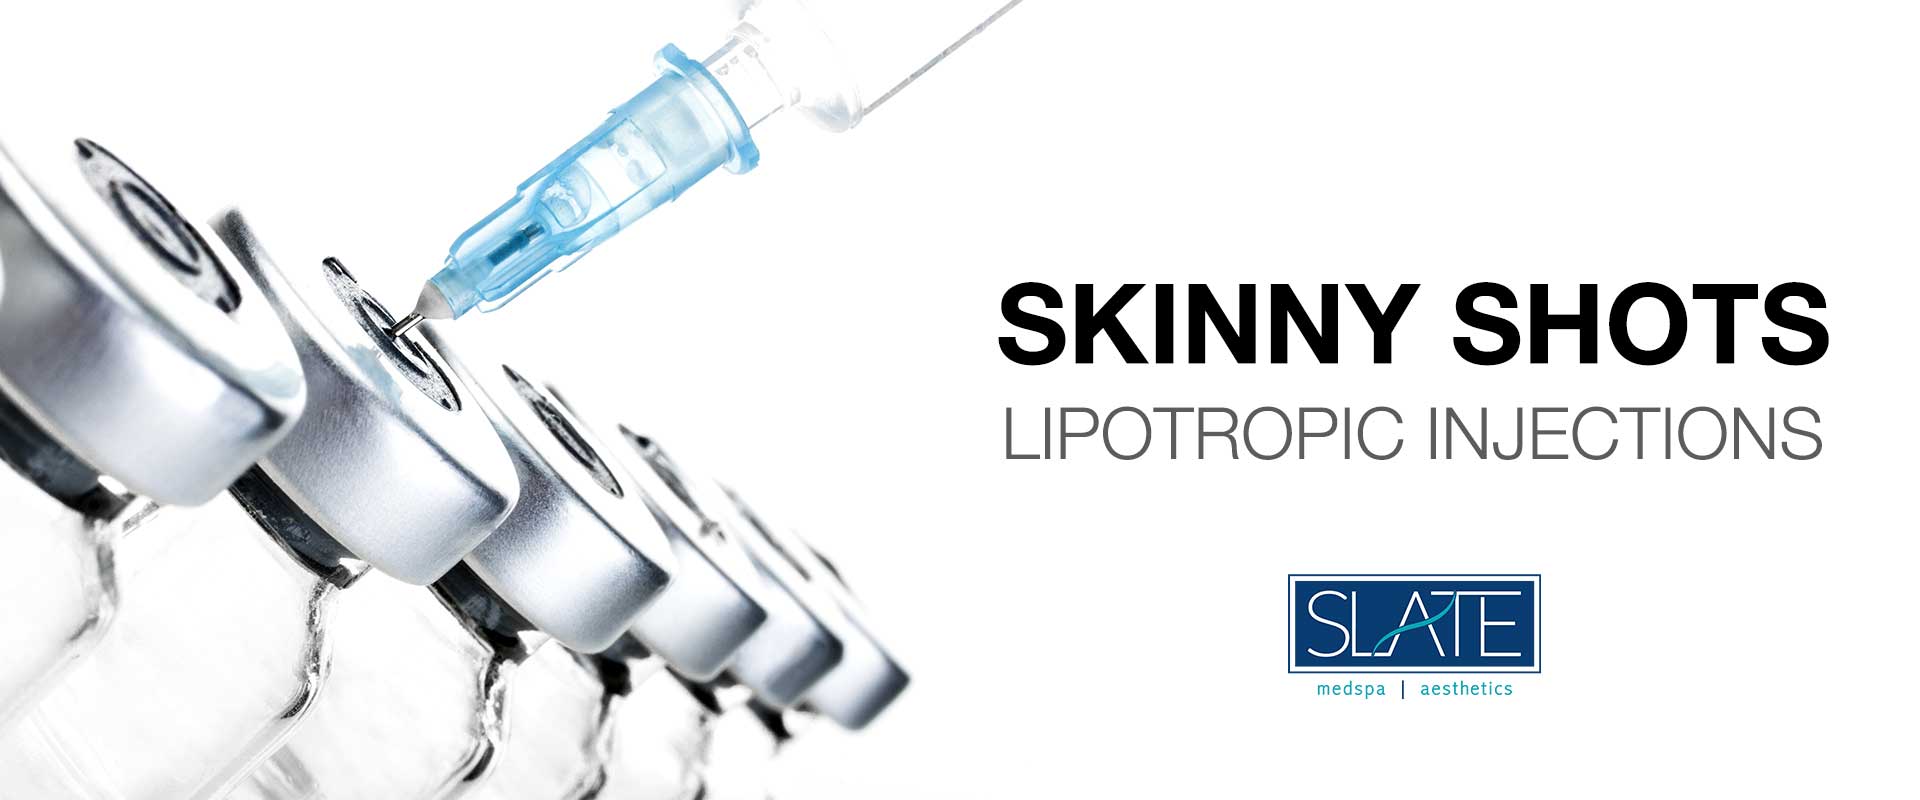 skinny-shots-lipotropic-injections